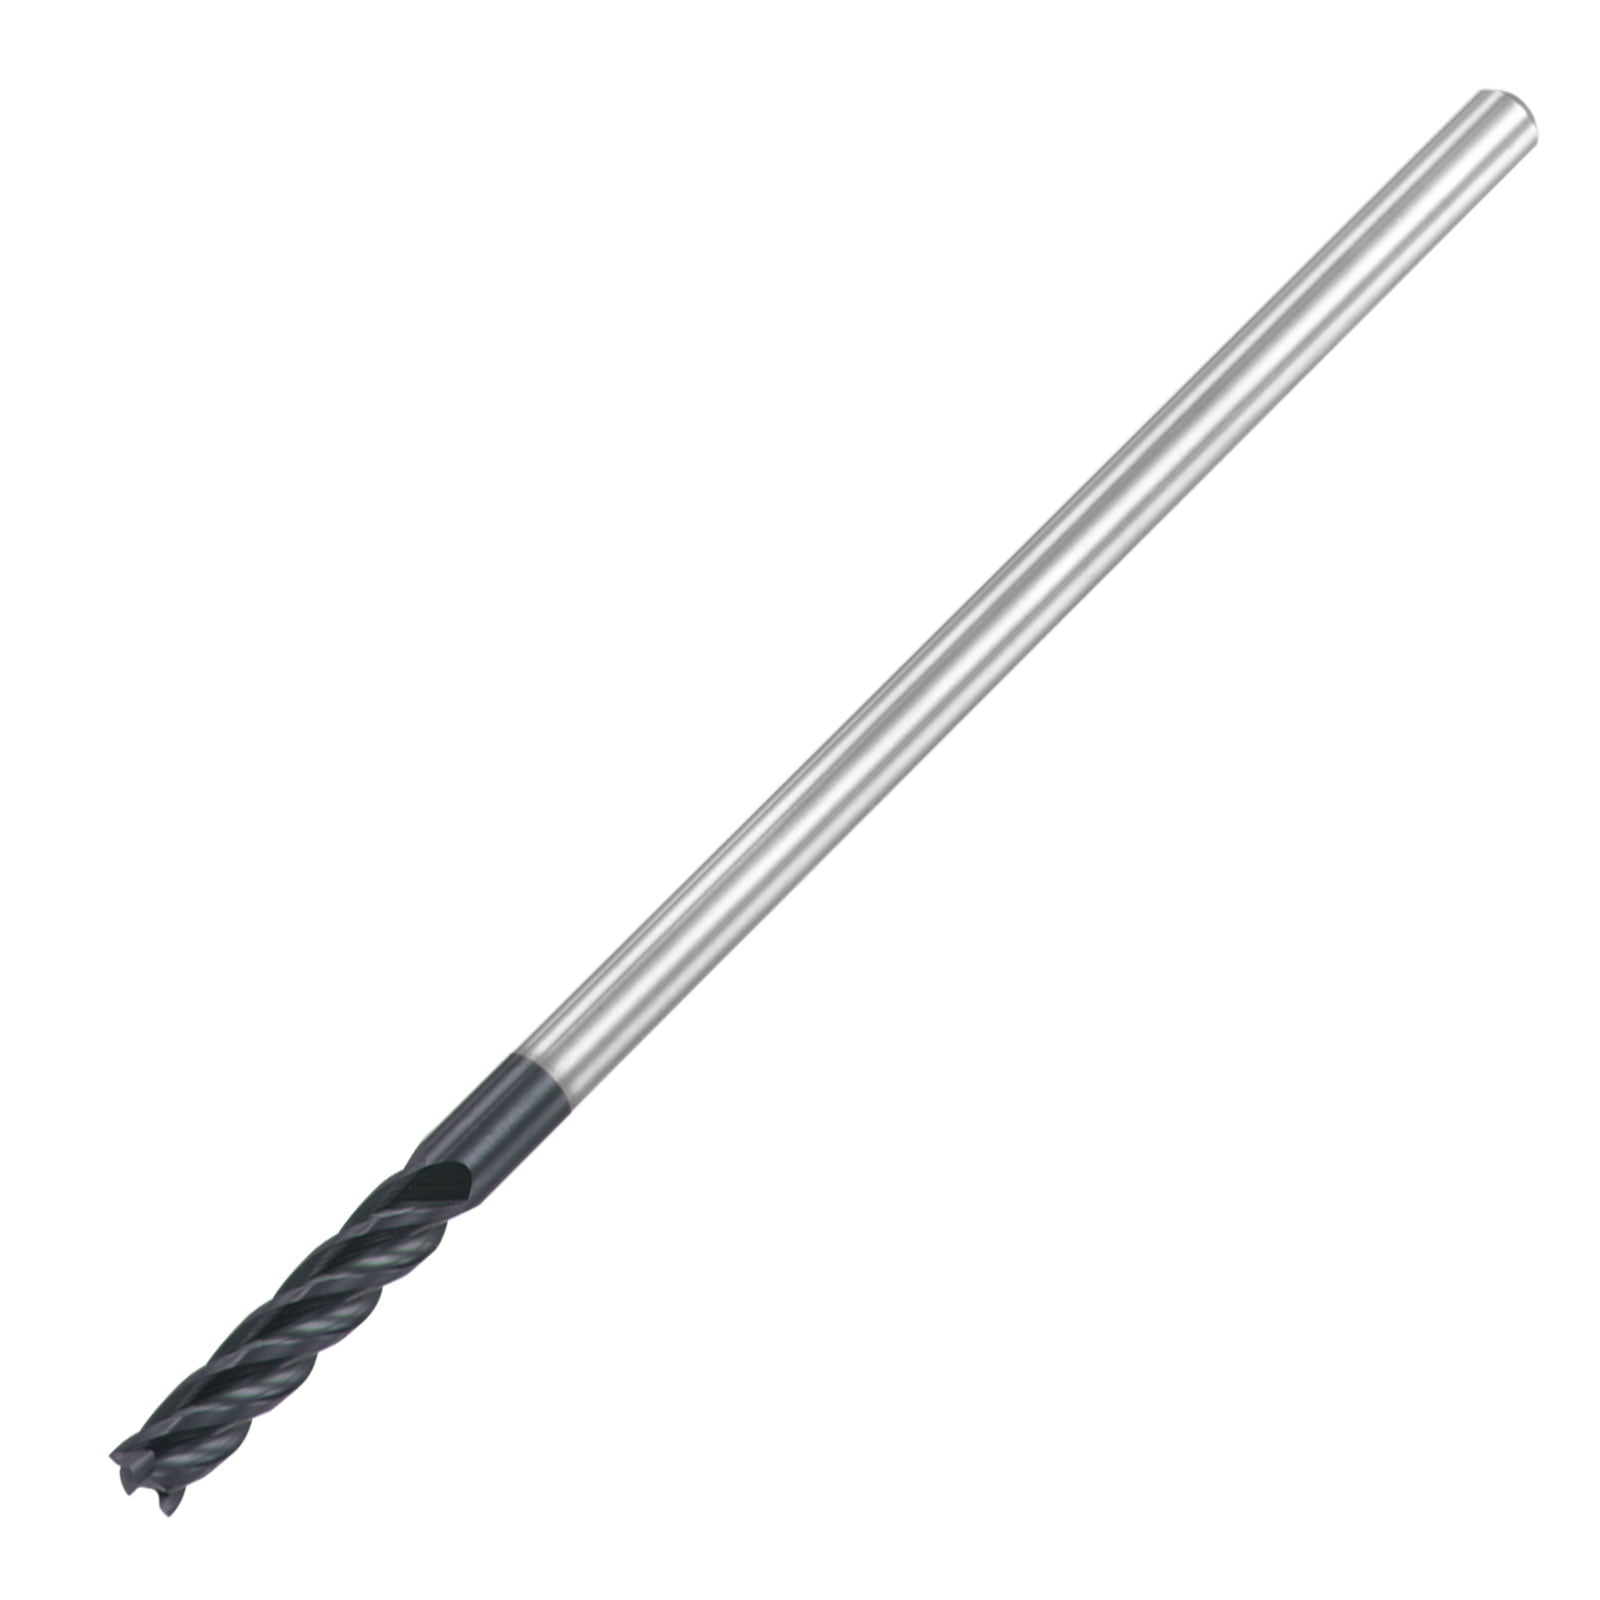 2PCS Tungsten Carbide HRC45 4 Flutes End Mill 3MM Shank Milling Cutter-Tool Set 